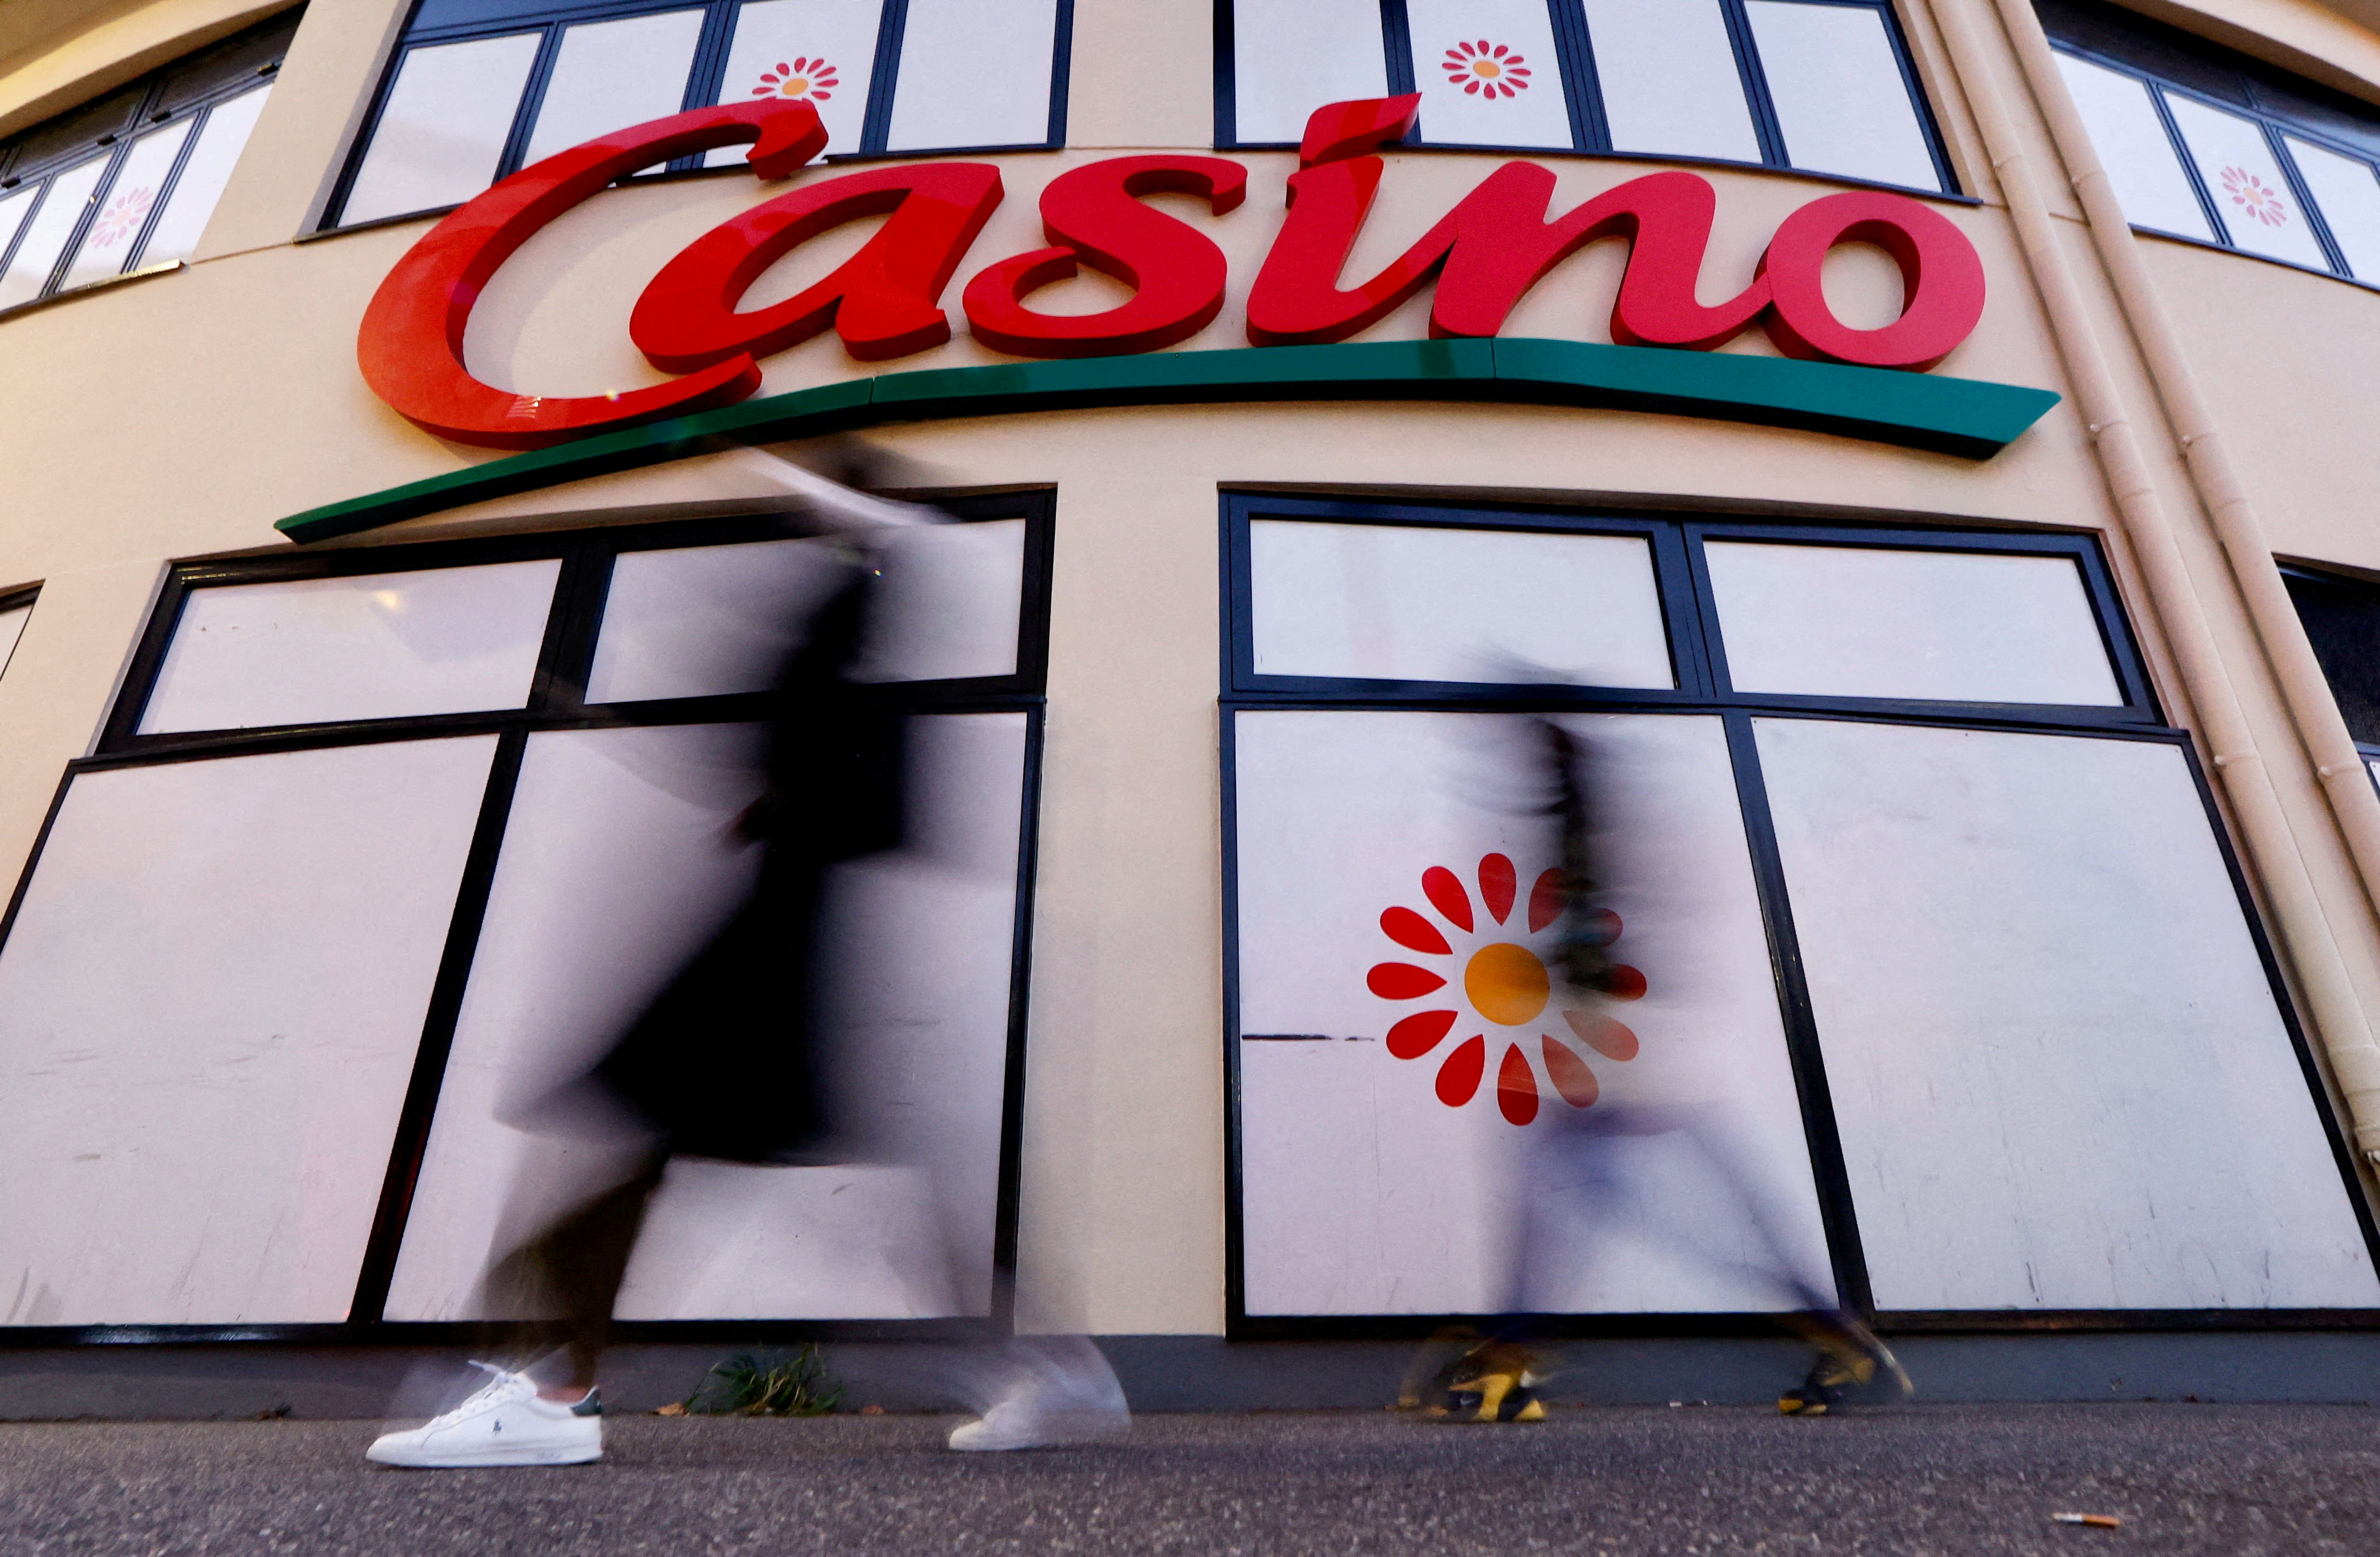 Semplici passaggi per una online casinos italy di 10 minuti